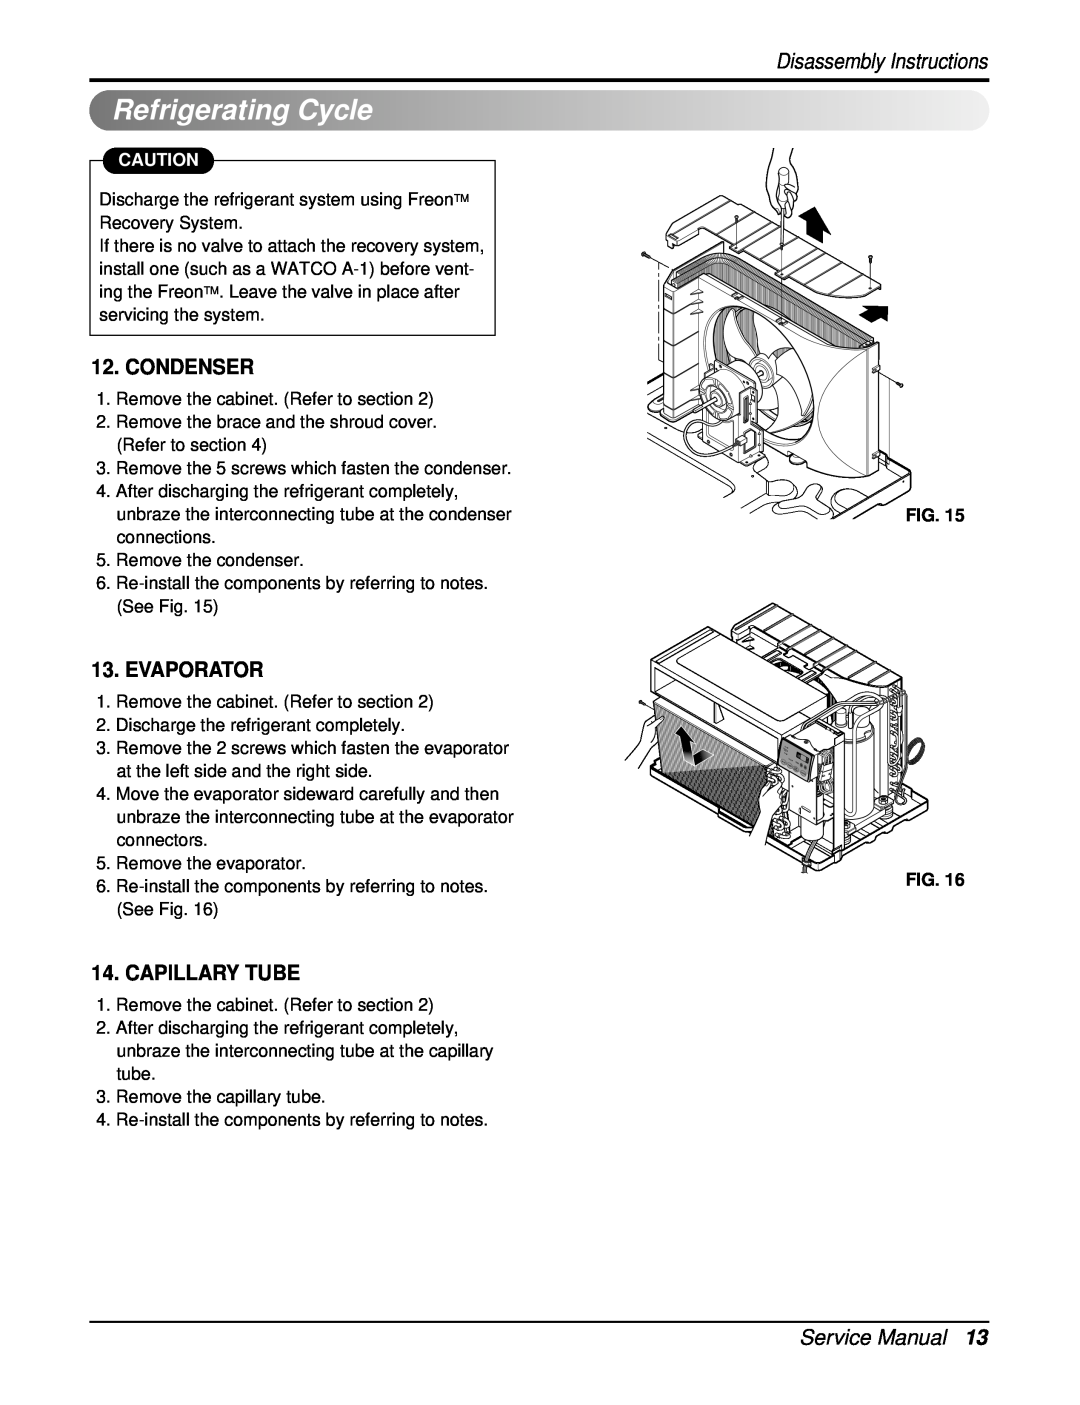 Friedrich UE10C33, UE12C33, UE08C13 RefrigeratingCycle, Condenser, Evaporator, Capillary Tube, Disassembly Instructions 